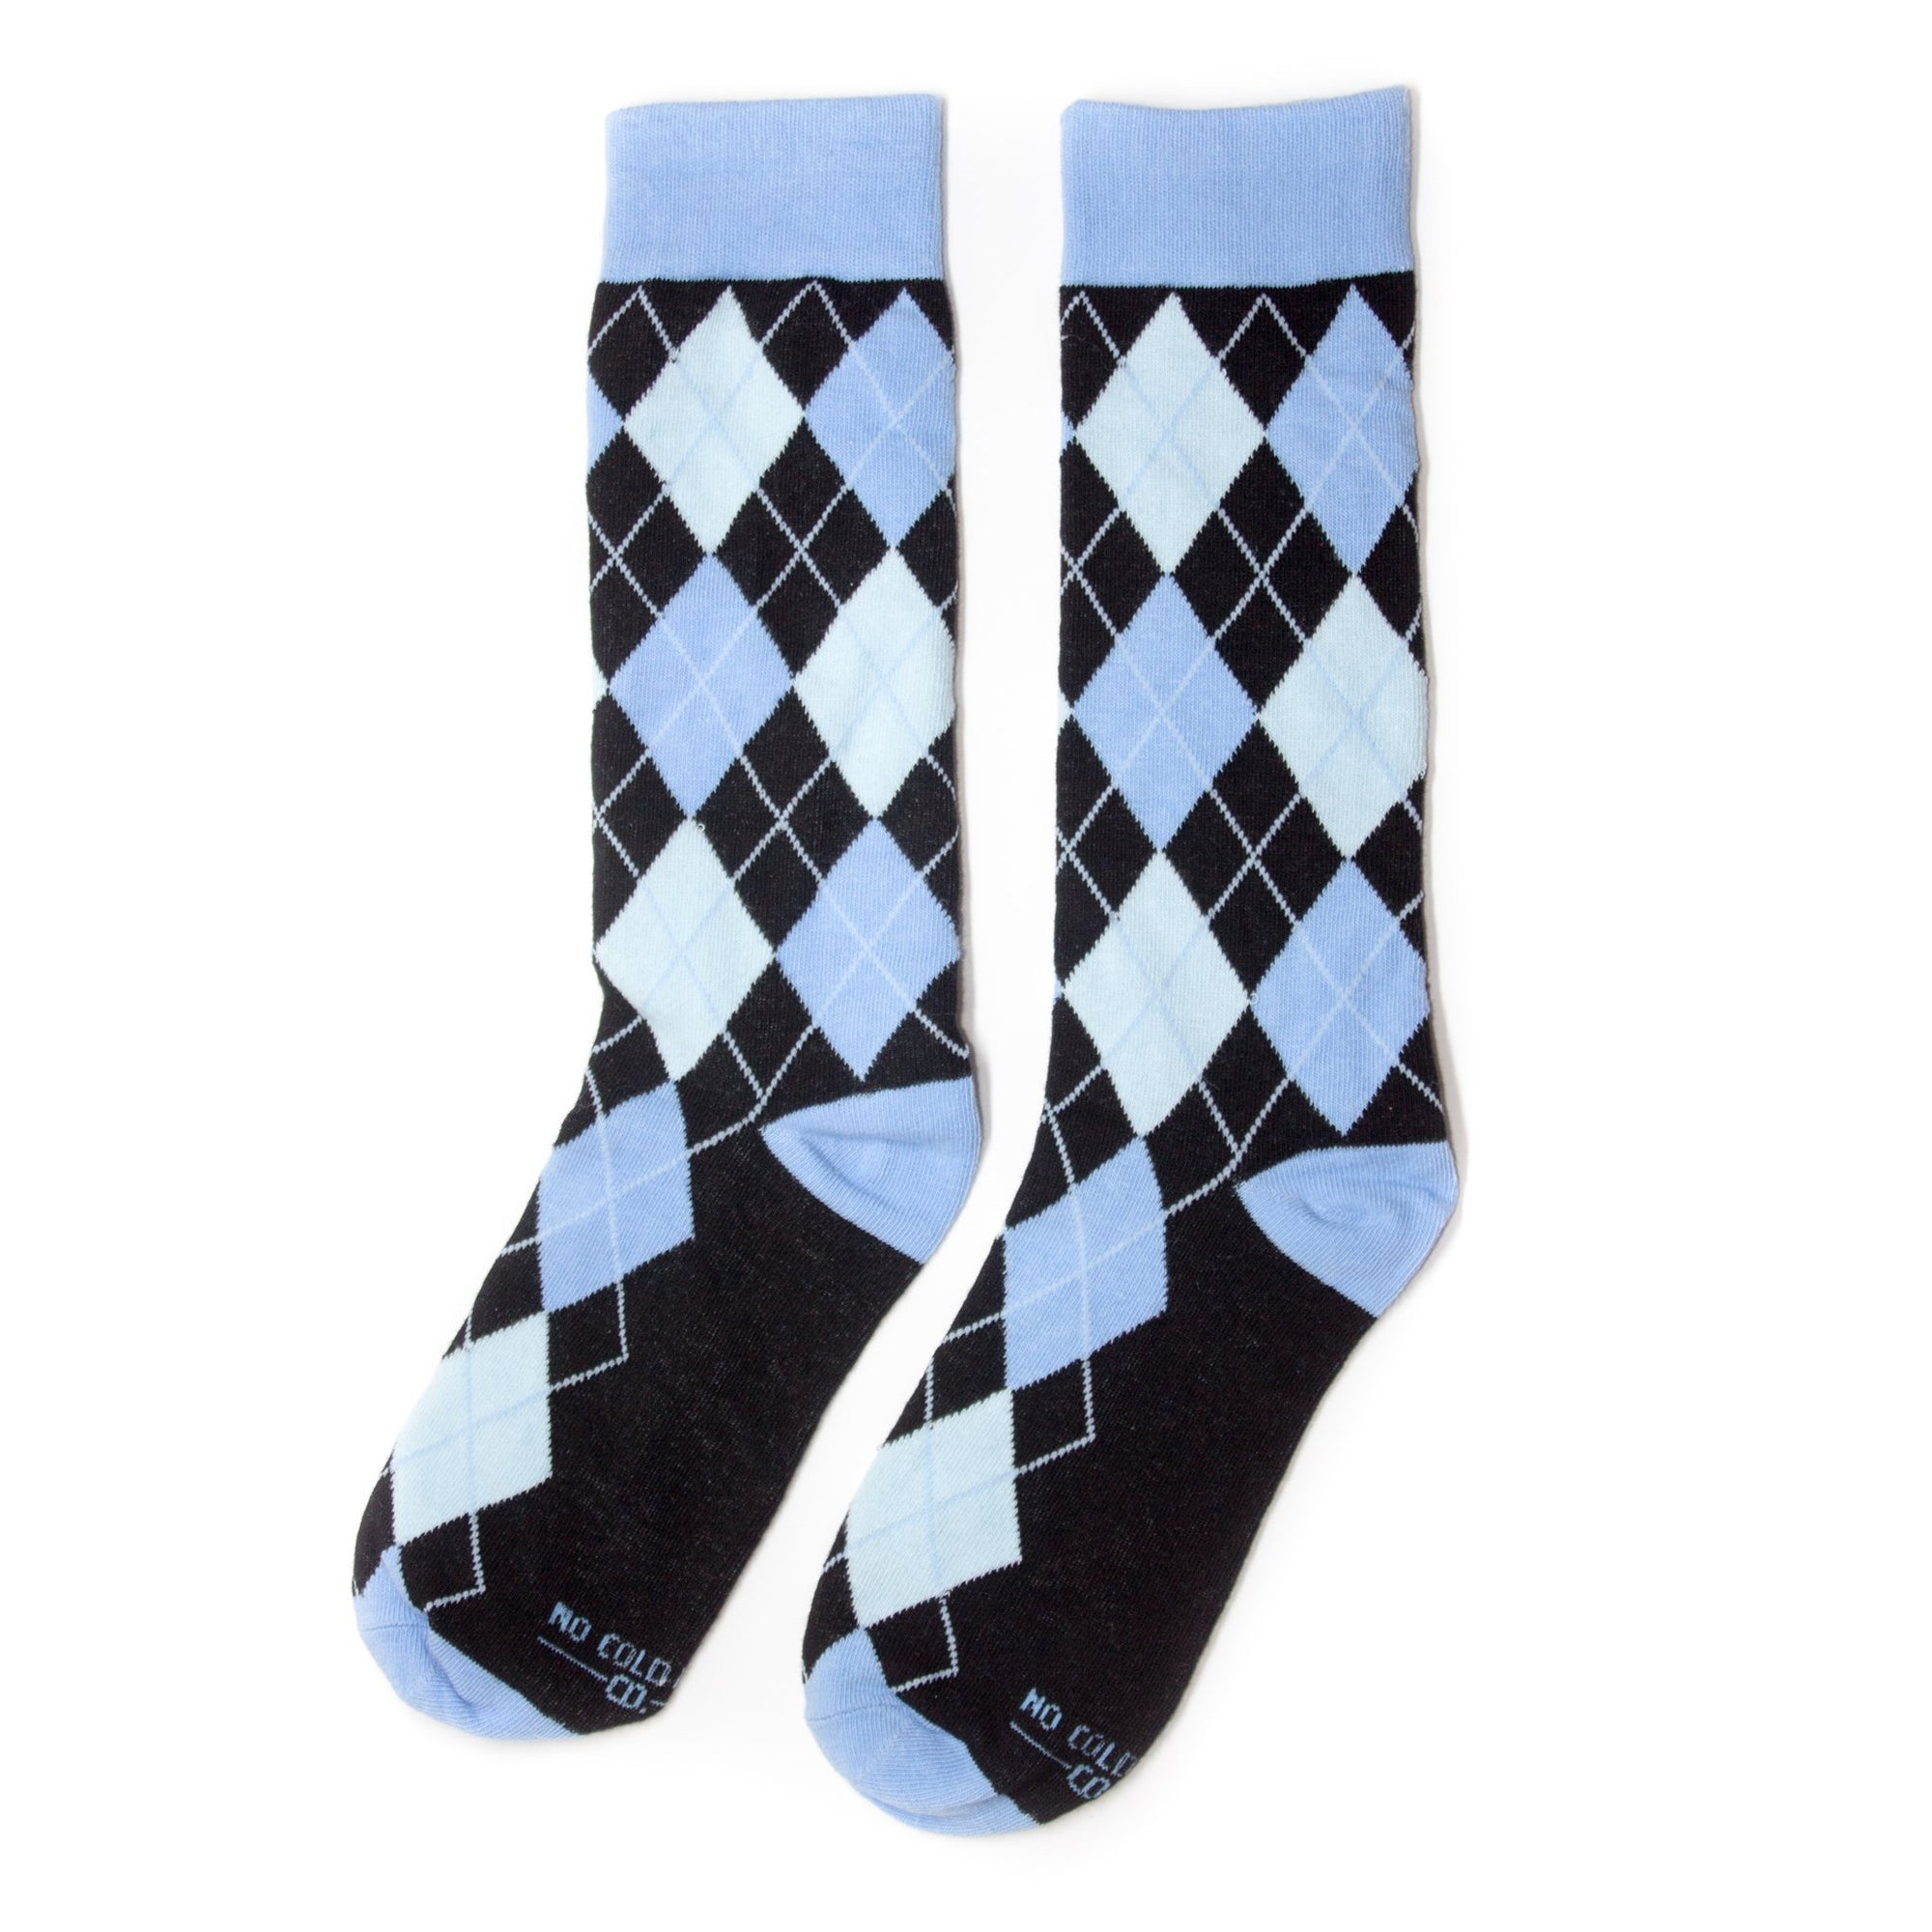 Personalized Name/Role/Date Groomsmen Socks Blue & Black Argyle